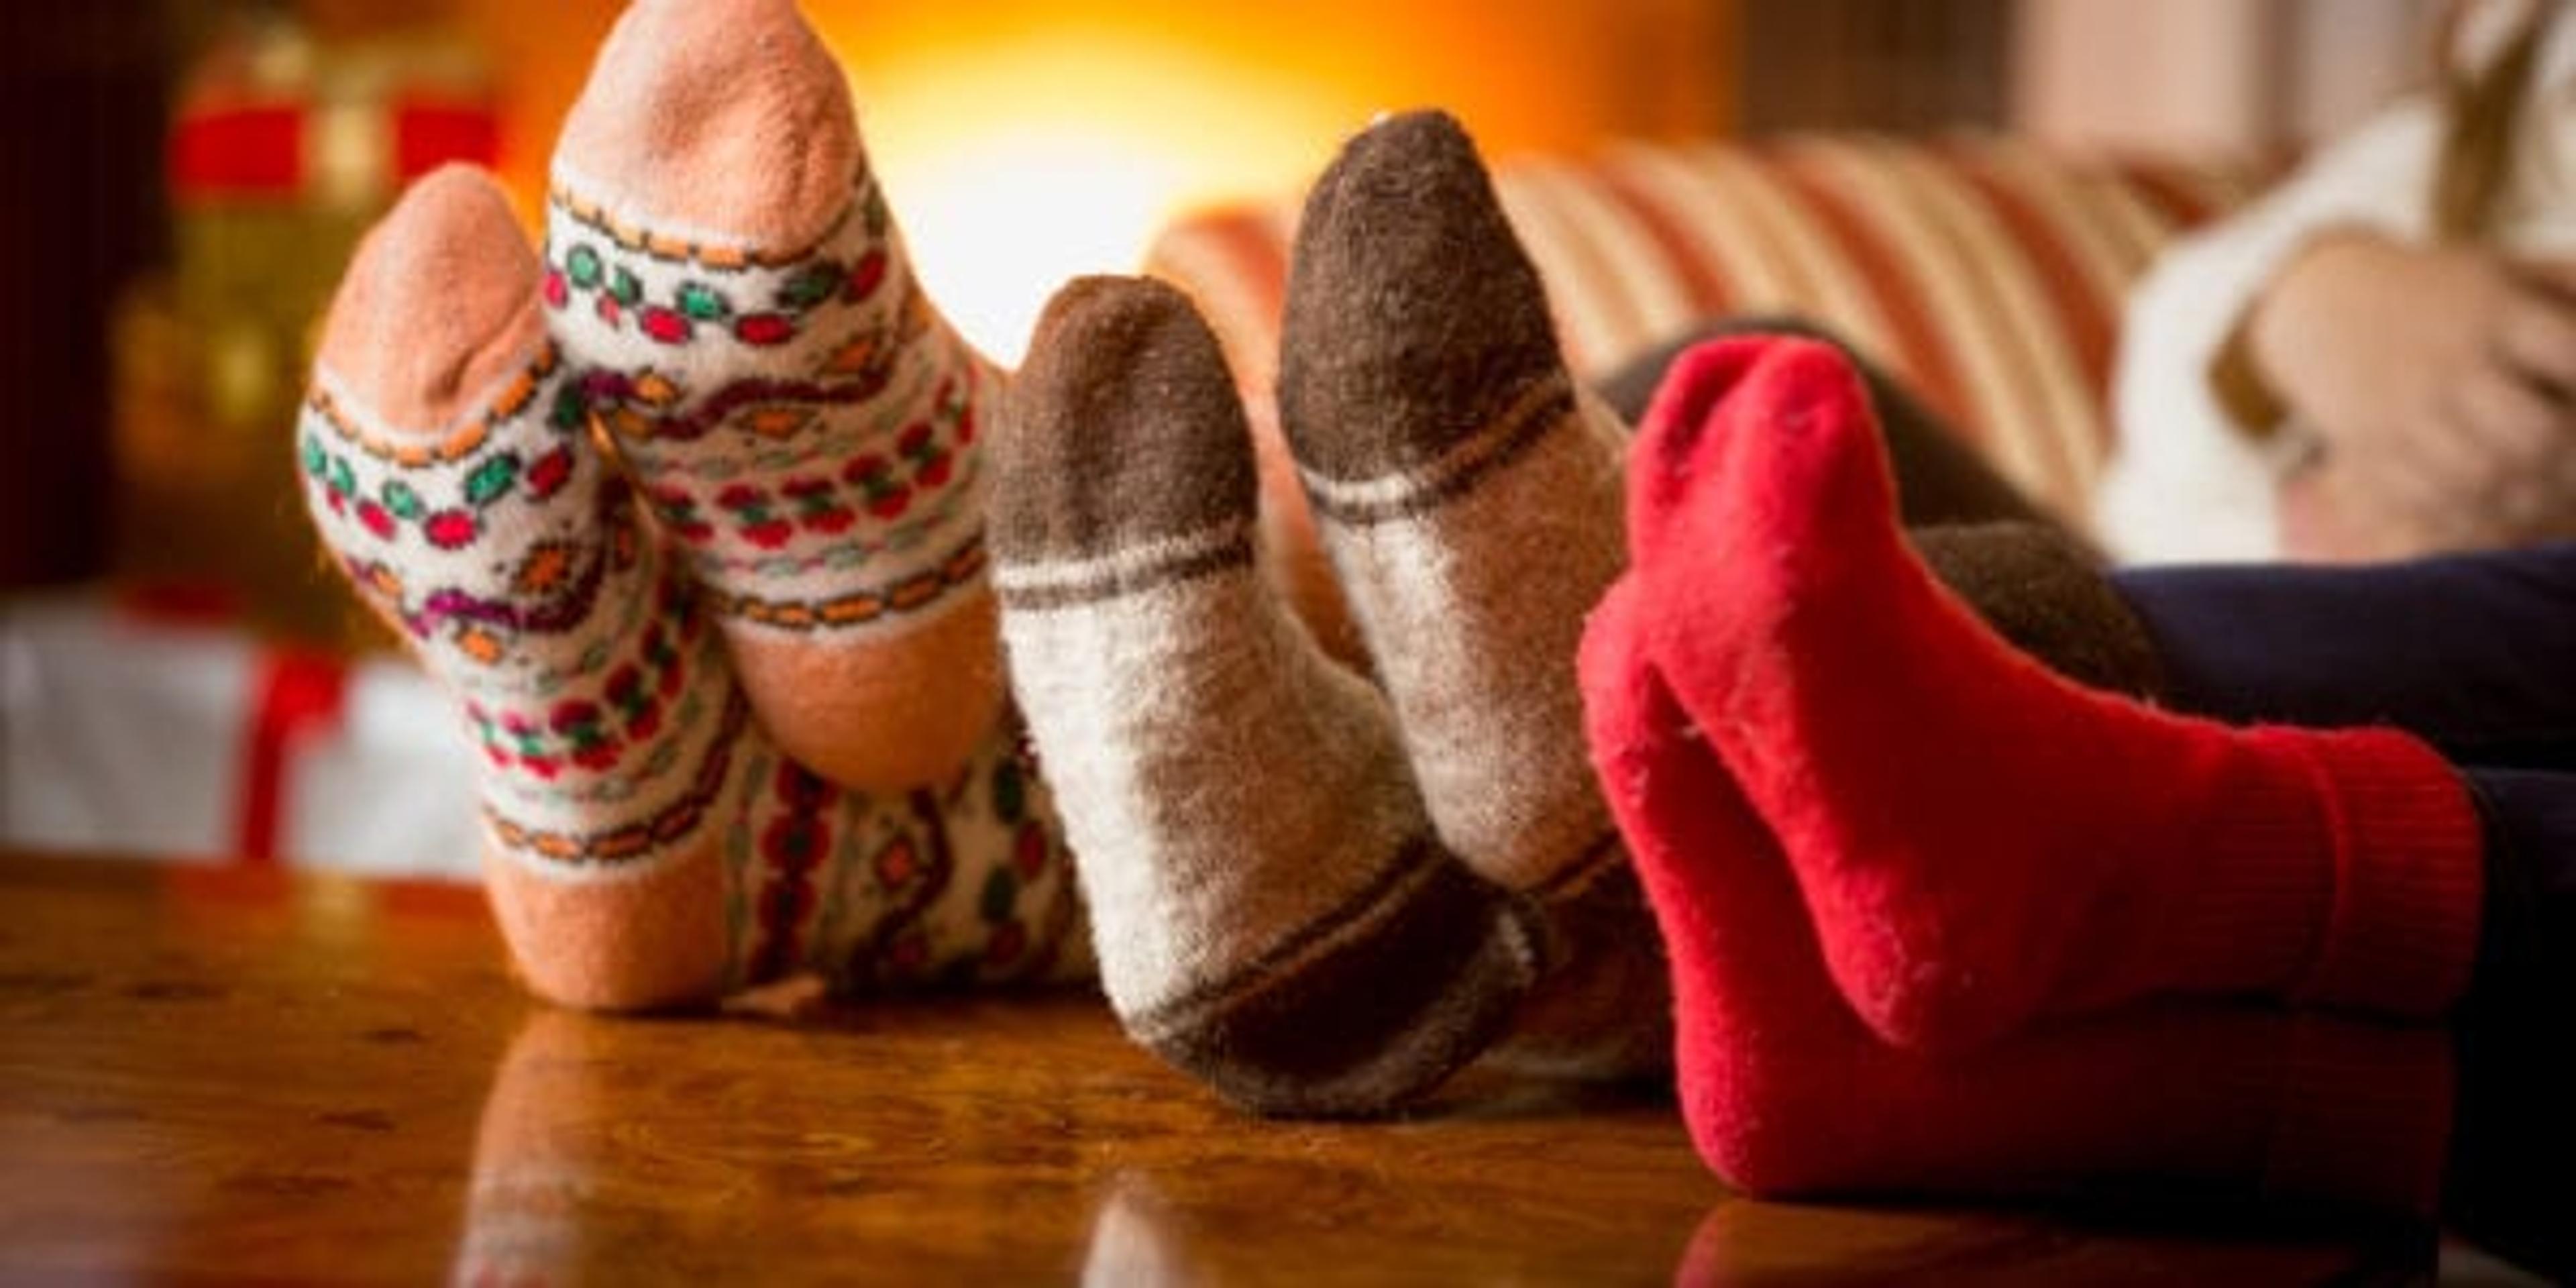 Healthy Winter at Home Flu Season